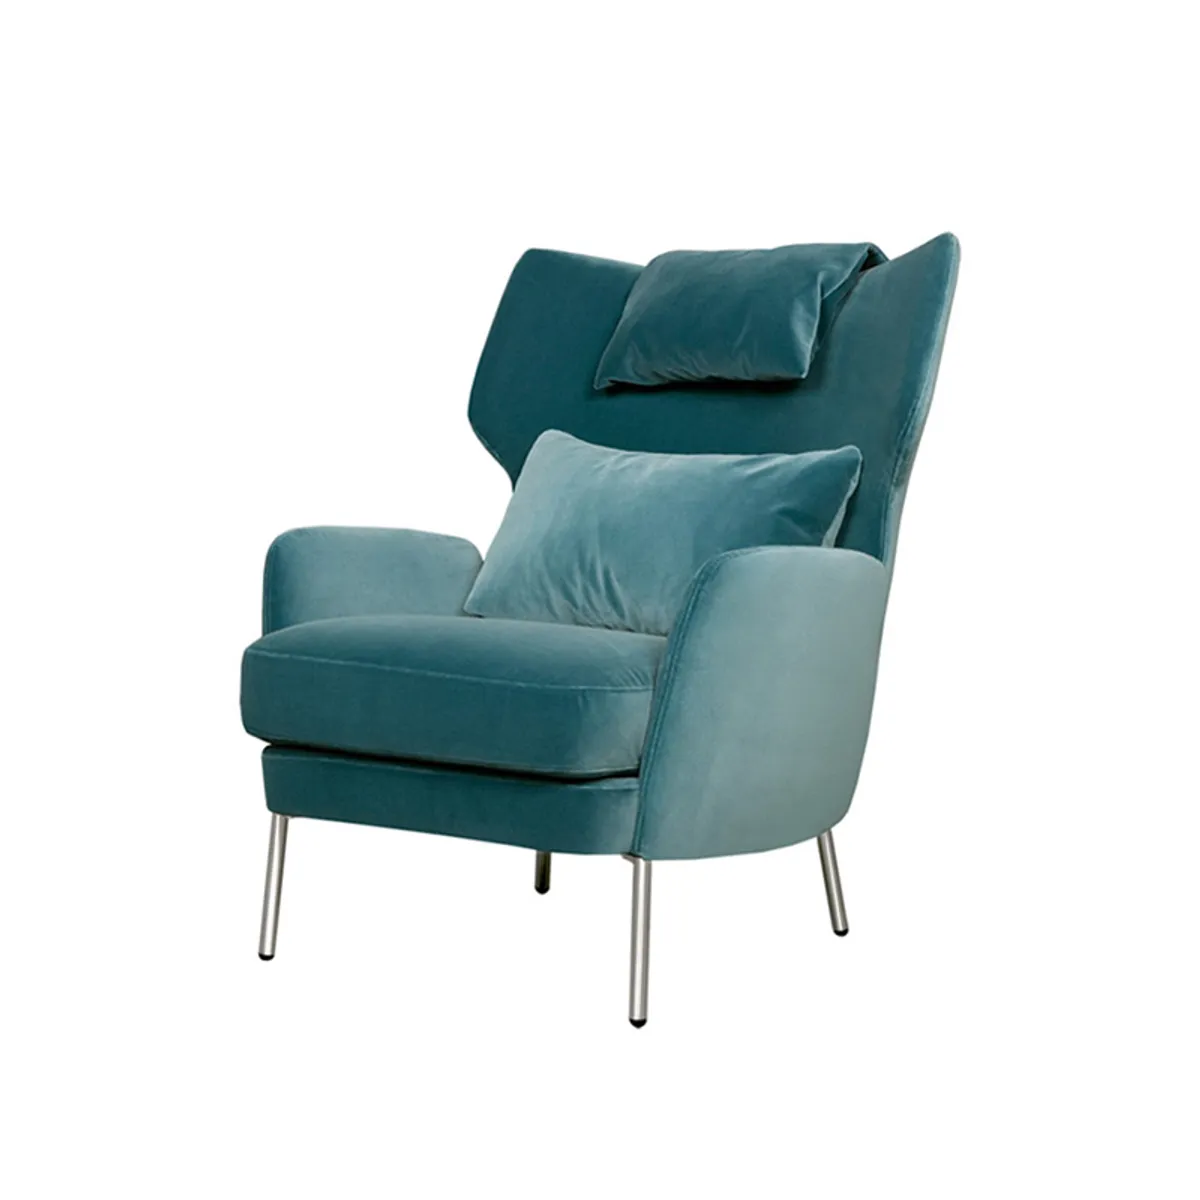 Alexa Highback Chair Lario1406 Turquoise 002